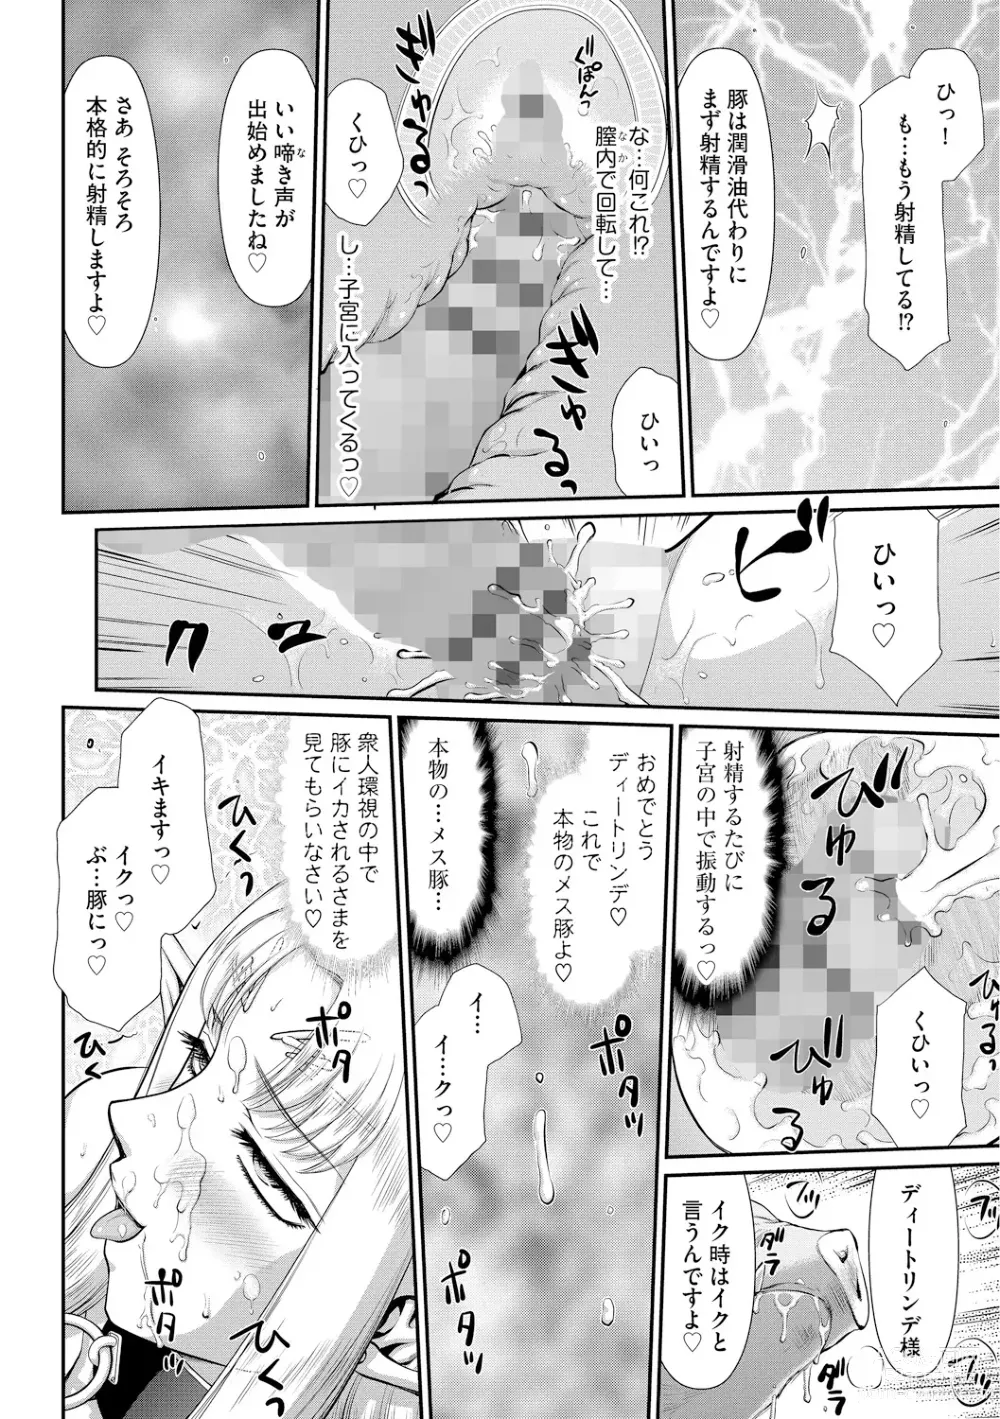 Page 188 of manga Ingoku no Kouki Dietlinde